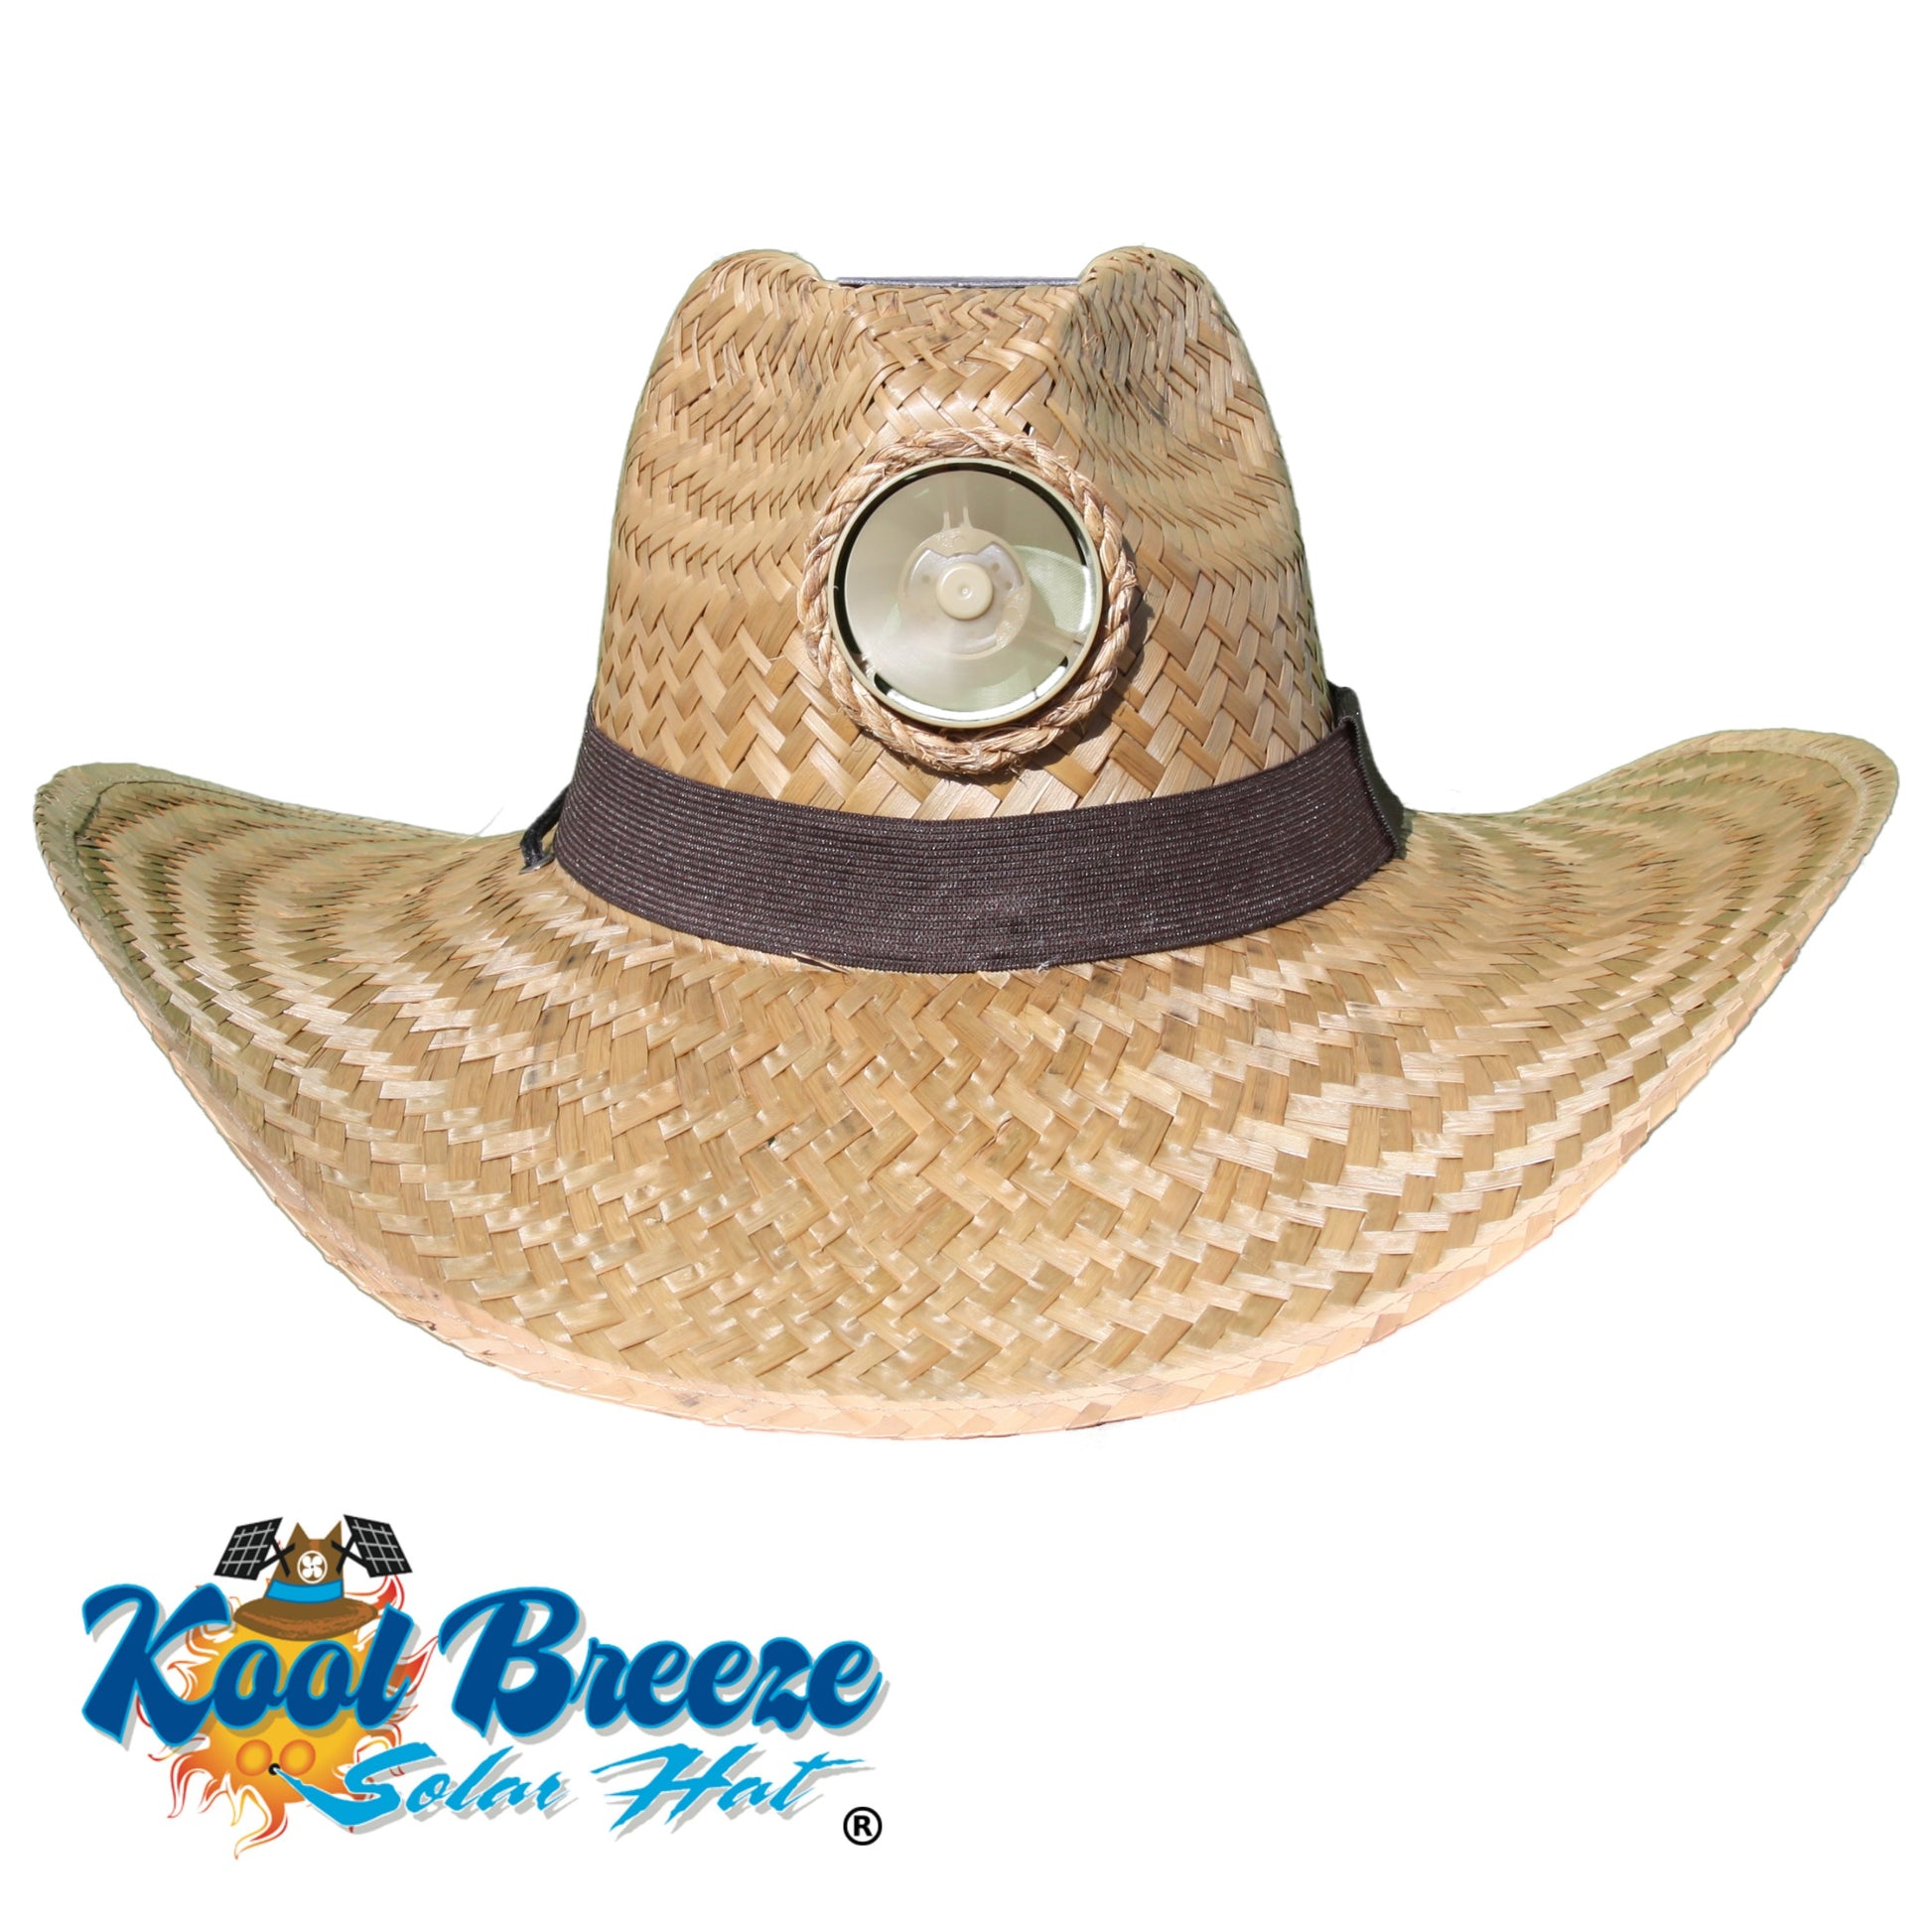 Alternate Front View of Gentleman's "Brown" Solar Straw Hat